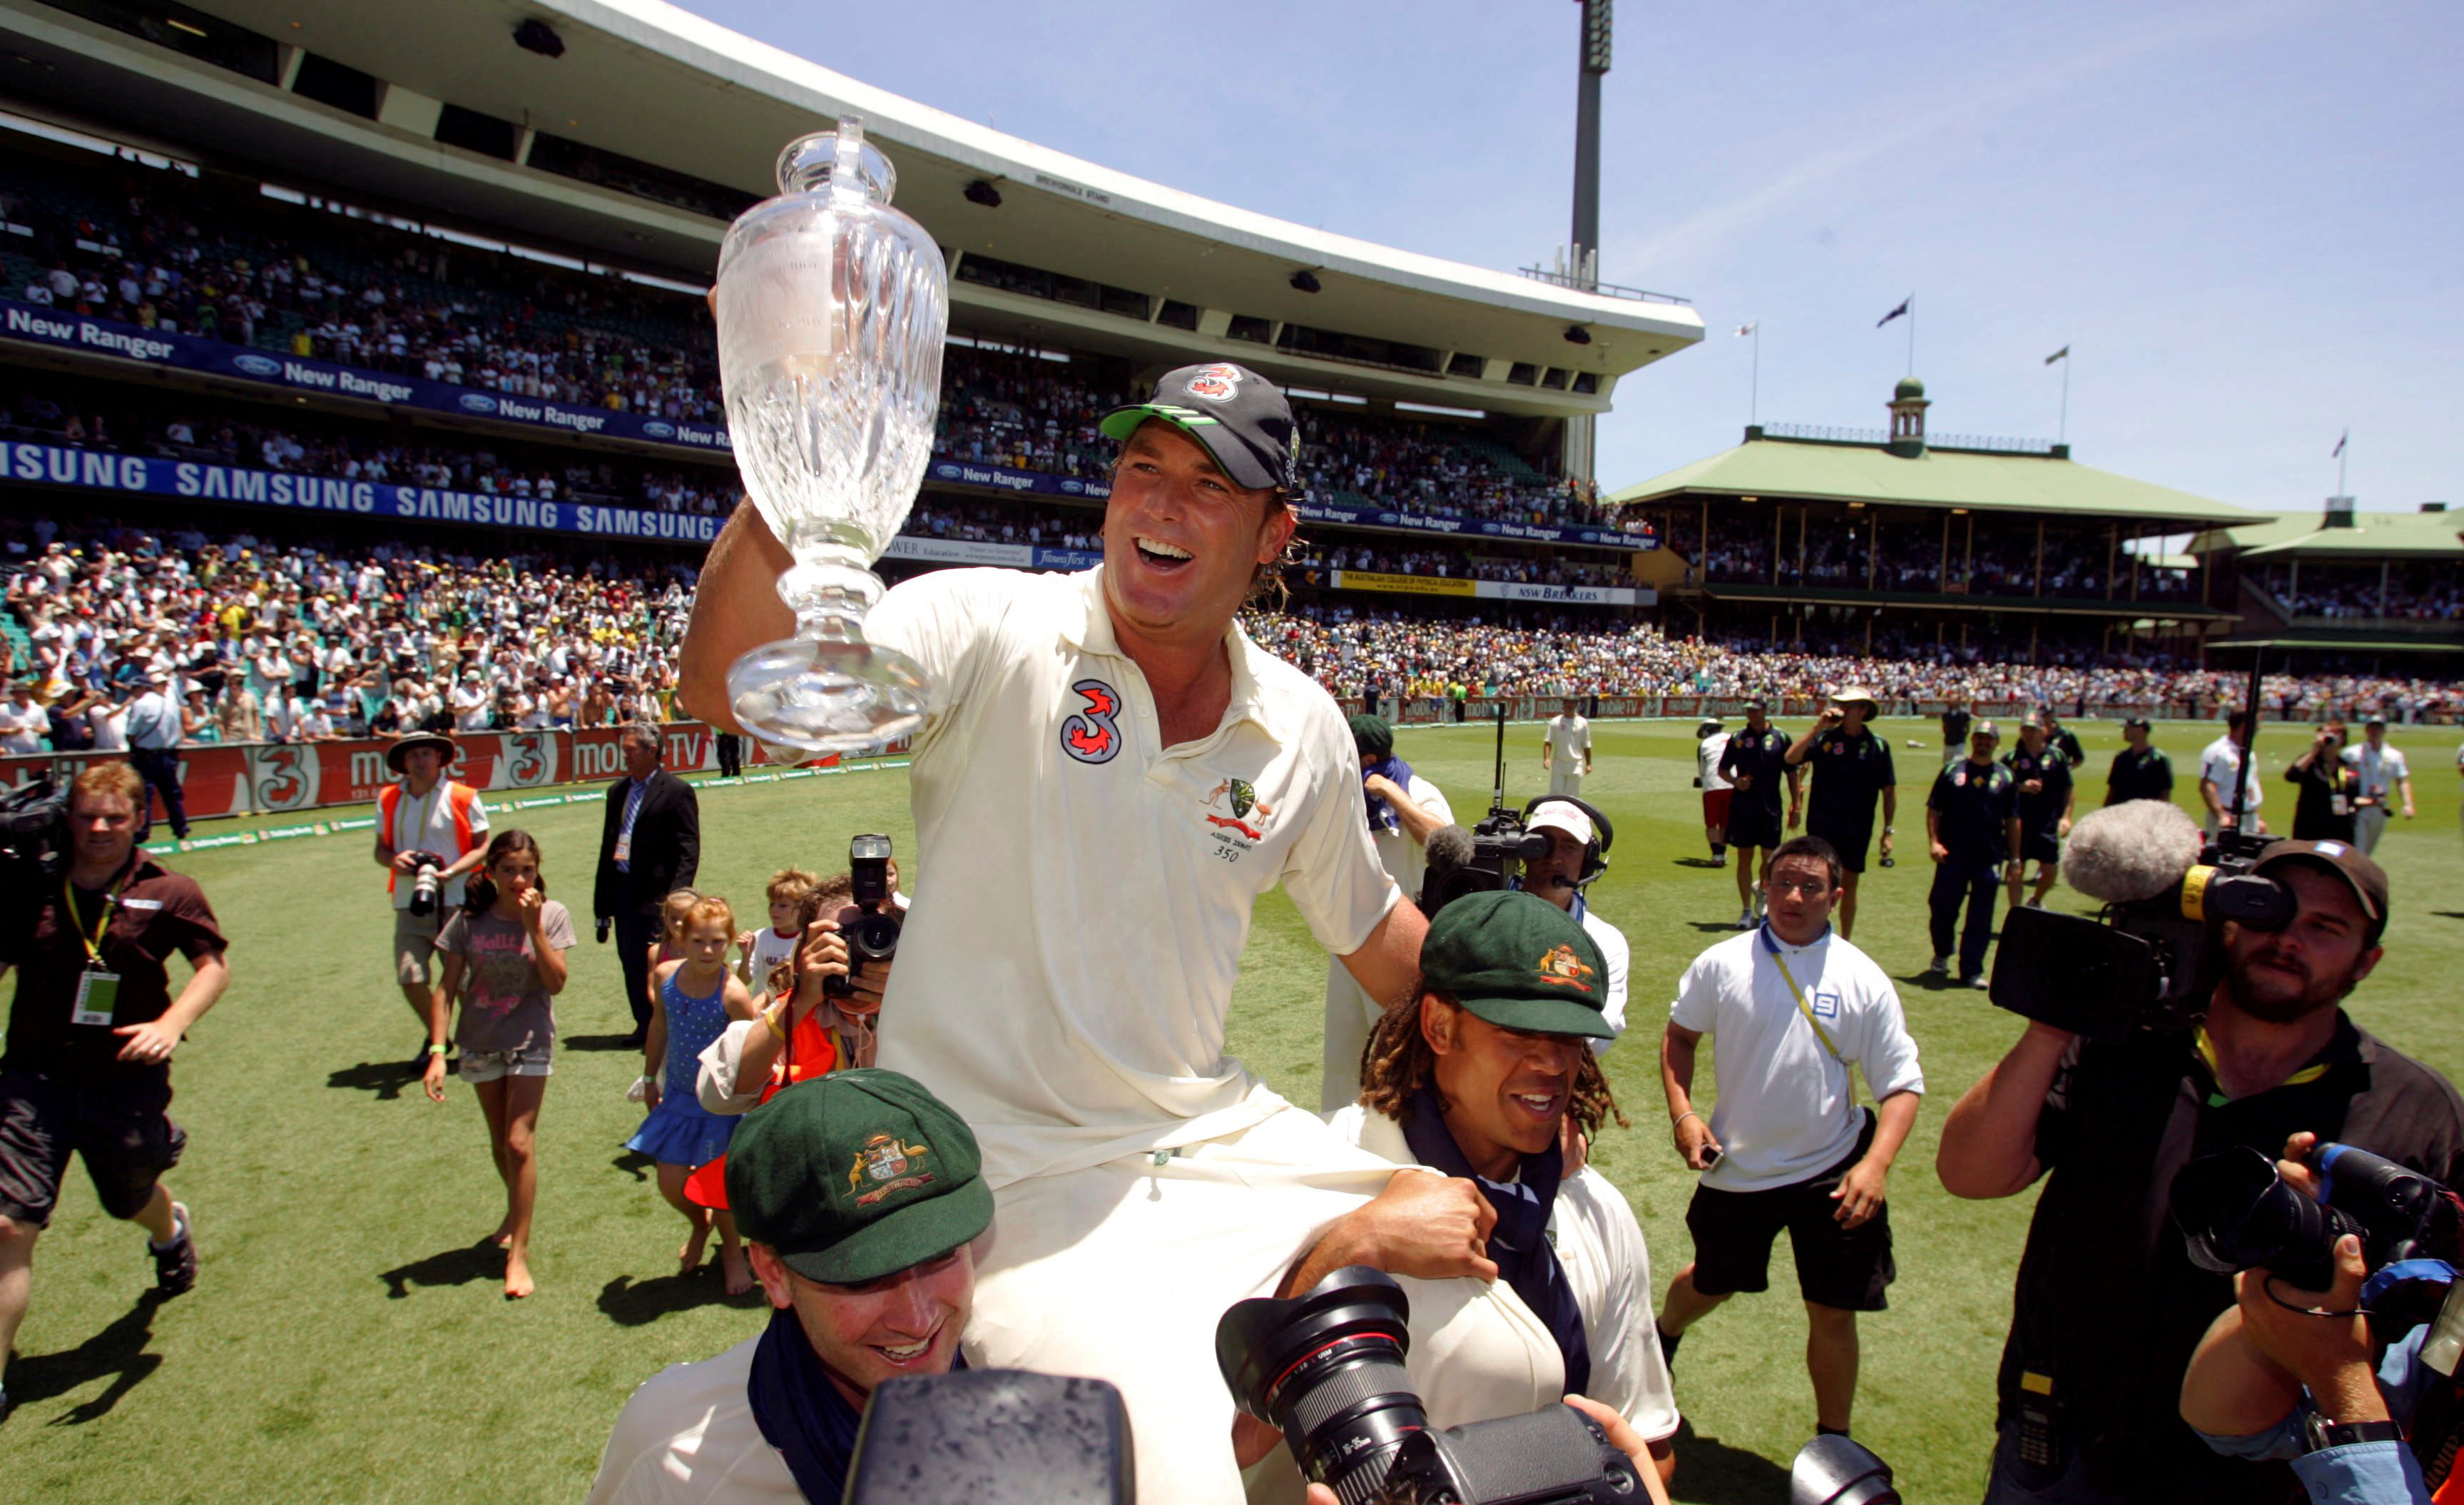 Australia v England FifthTest - 3 Mobile Ashes Test Series 2006-07